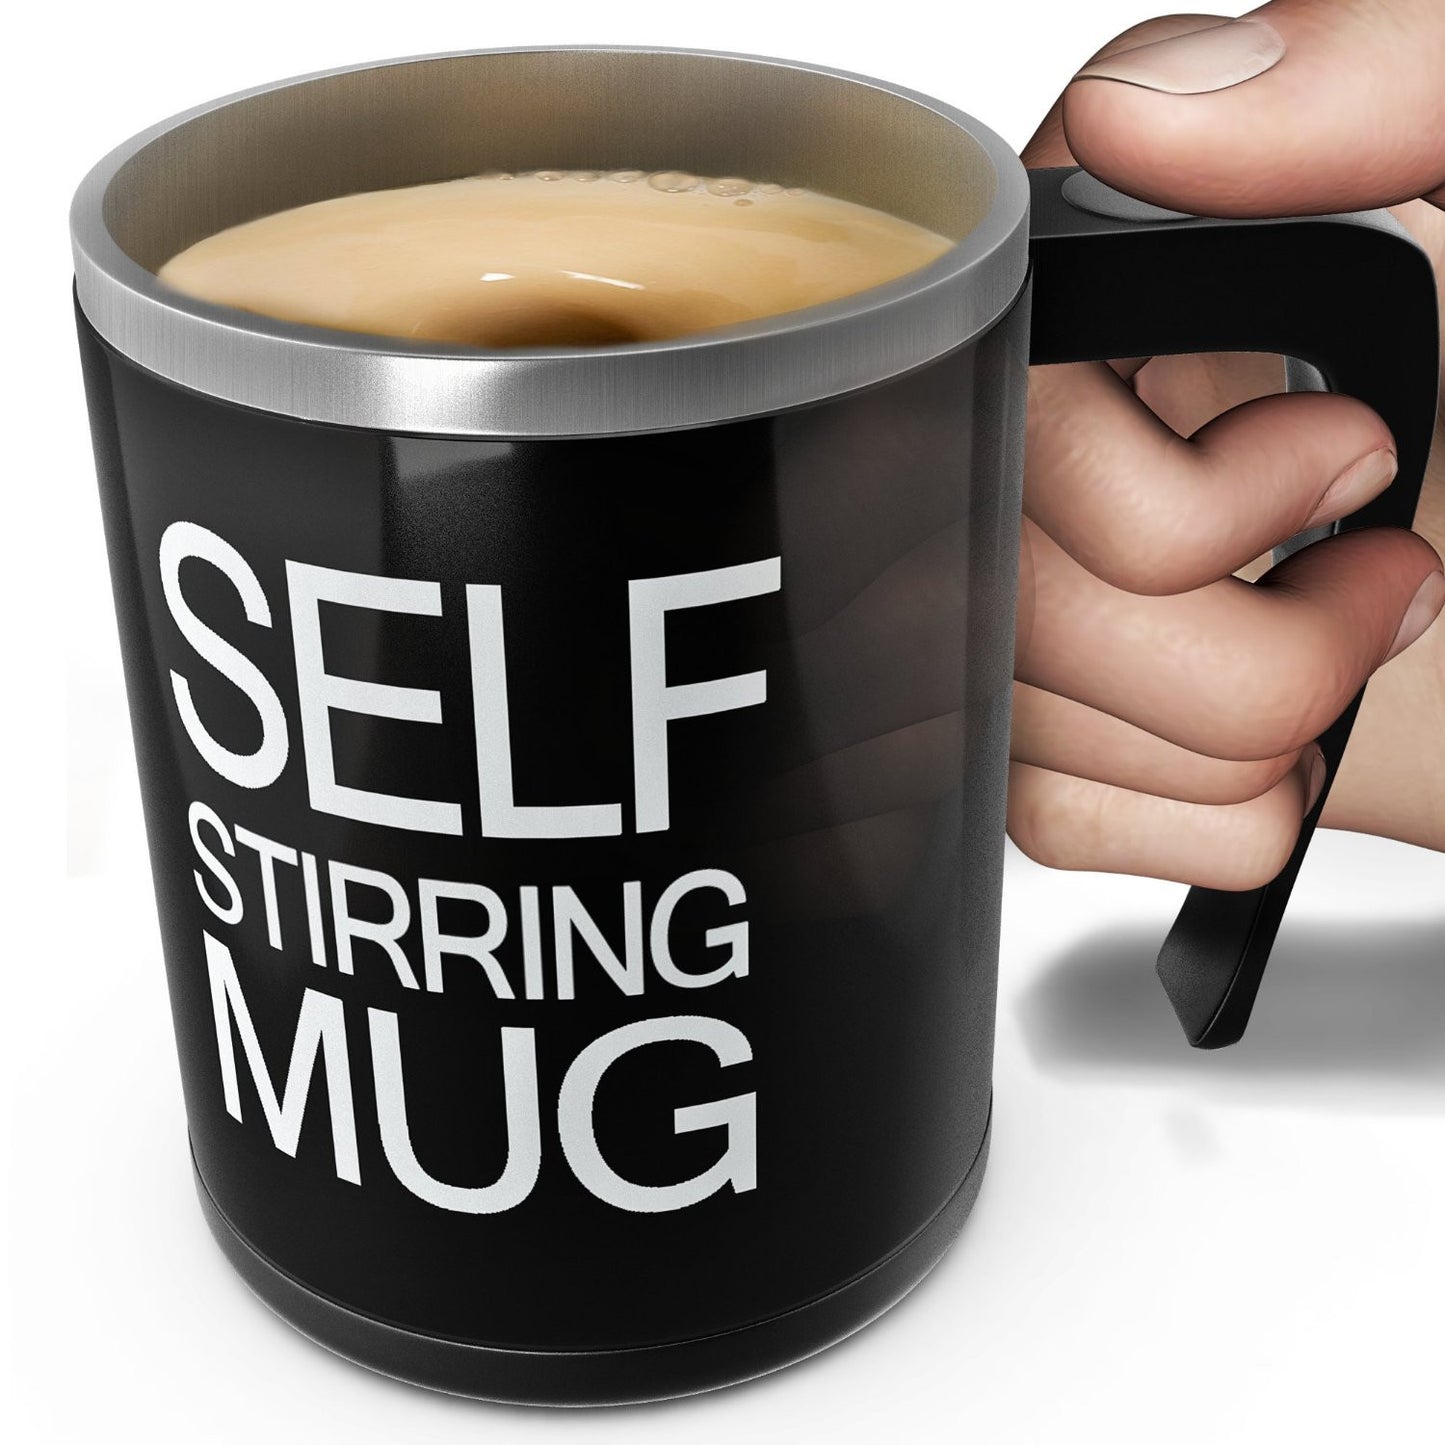 Shop Innovative Self Stirring Mug at best price, GoshopperQa.com